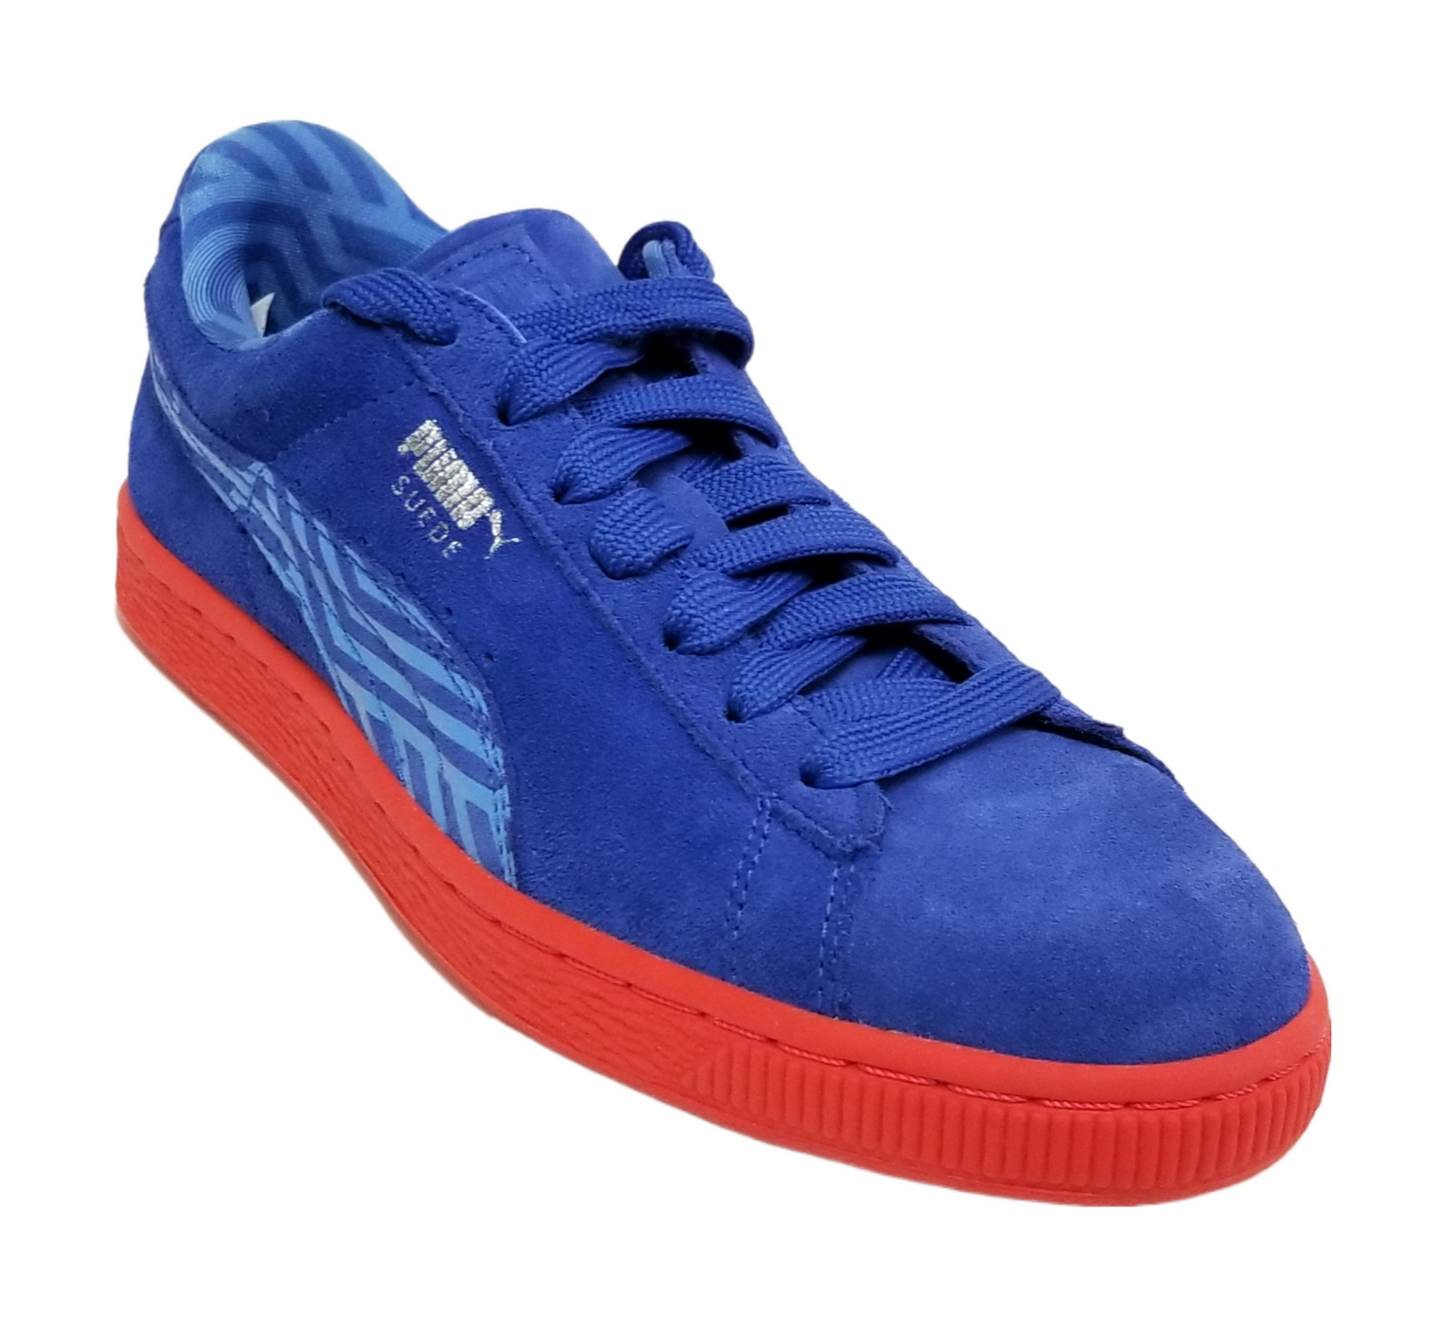 Puma Women Suede Classic + Colored Shoes Dazzling-Marina Blue-Grenadn 360249-03